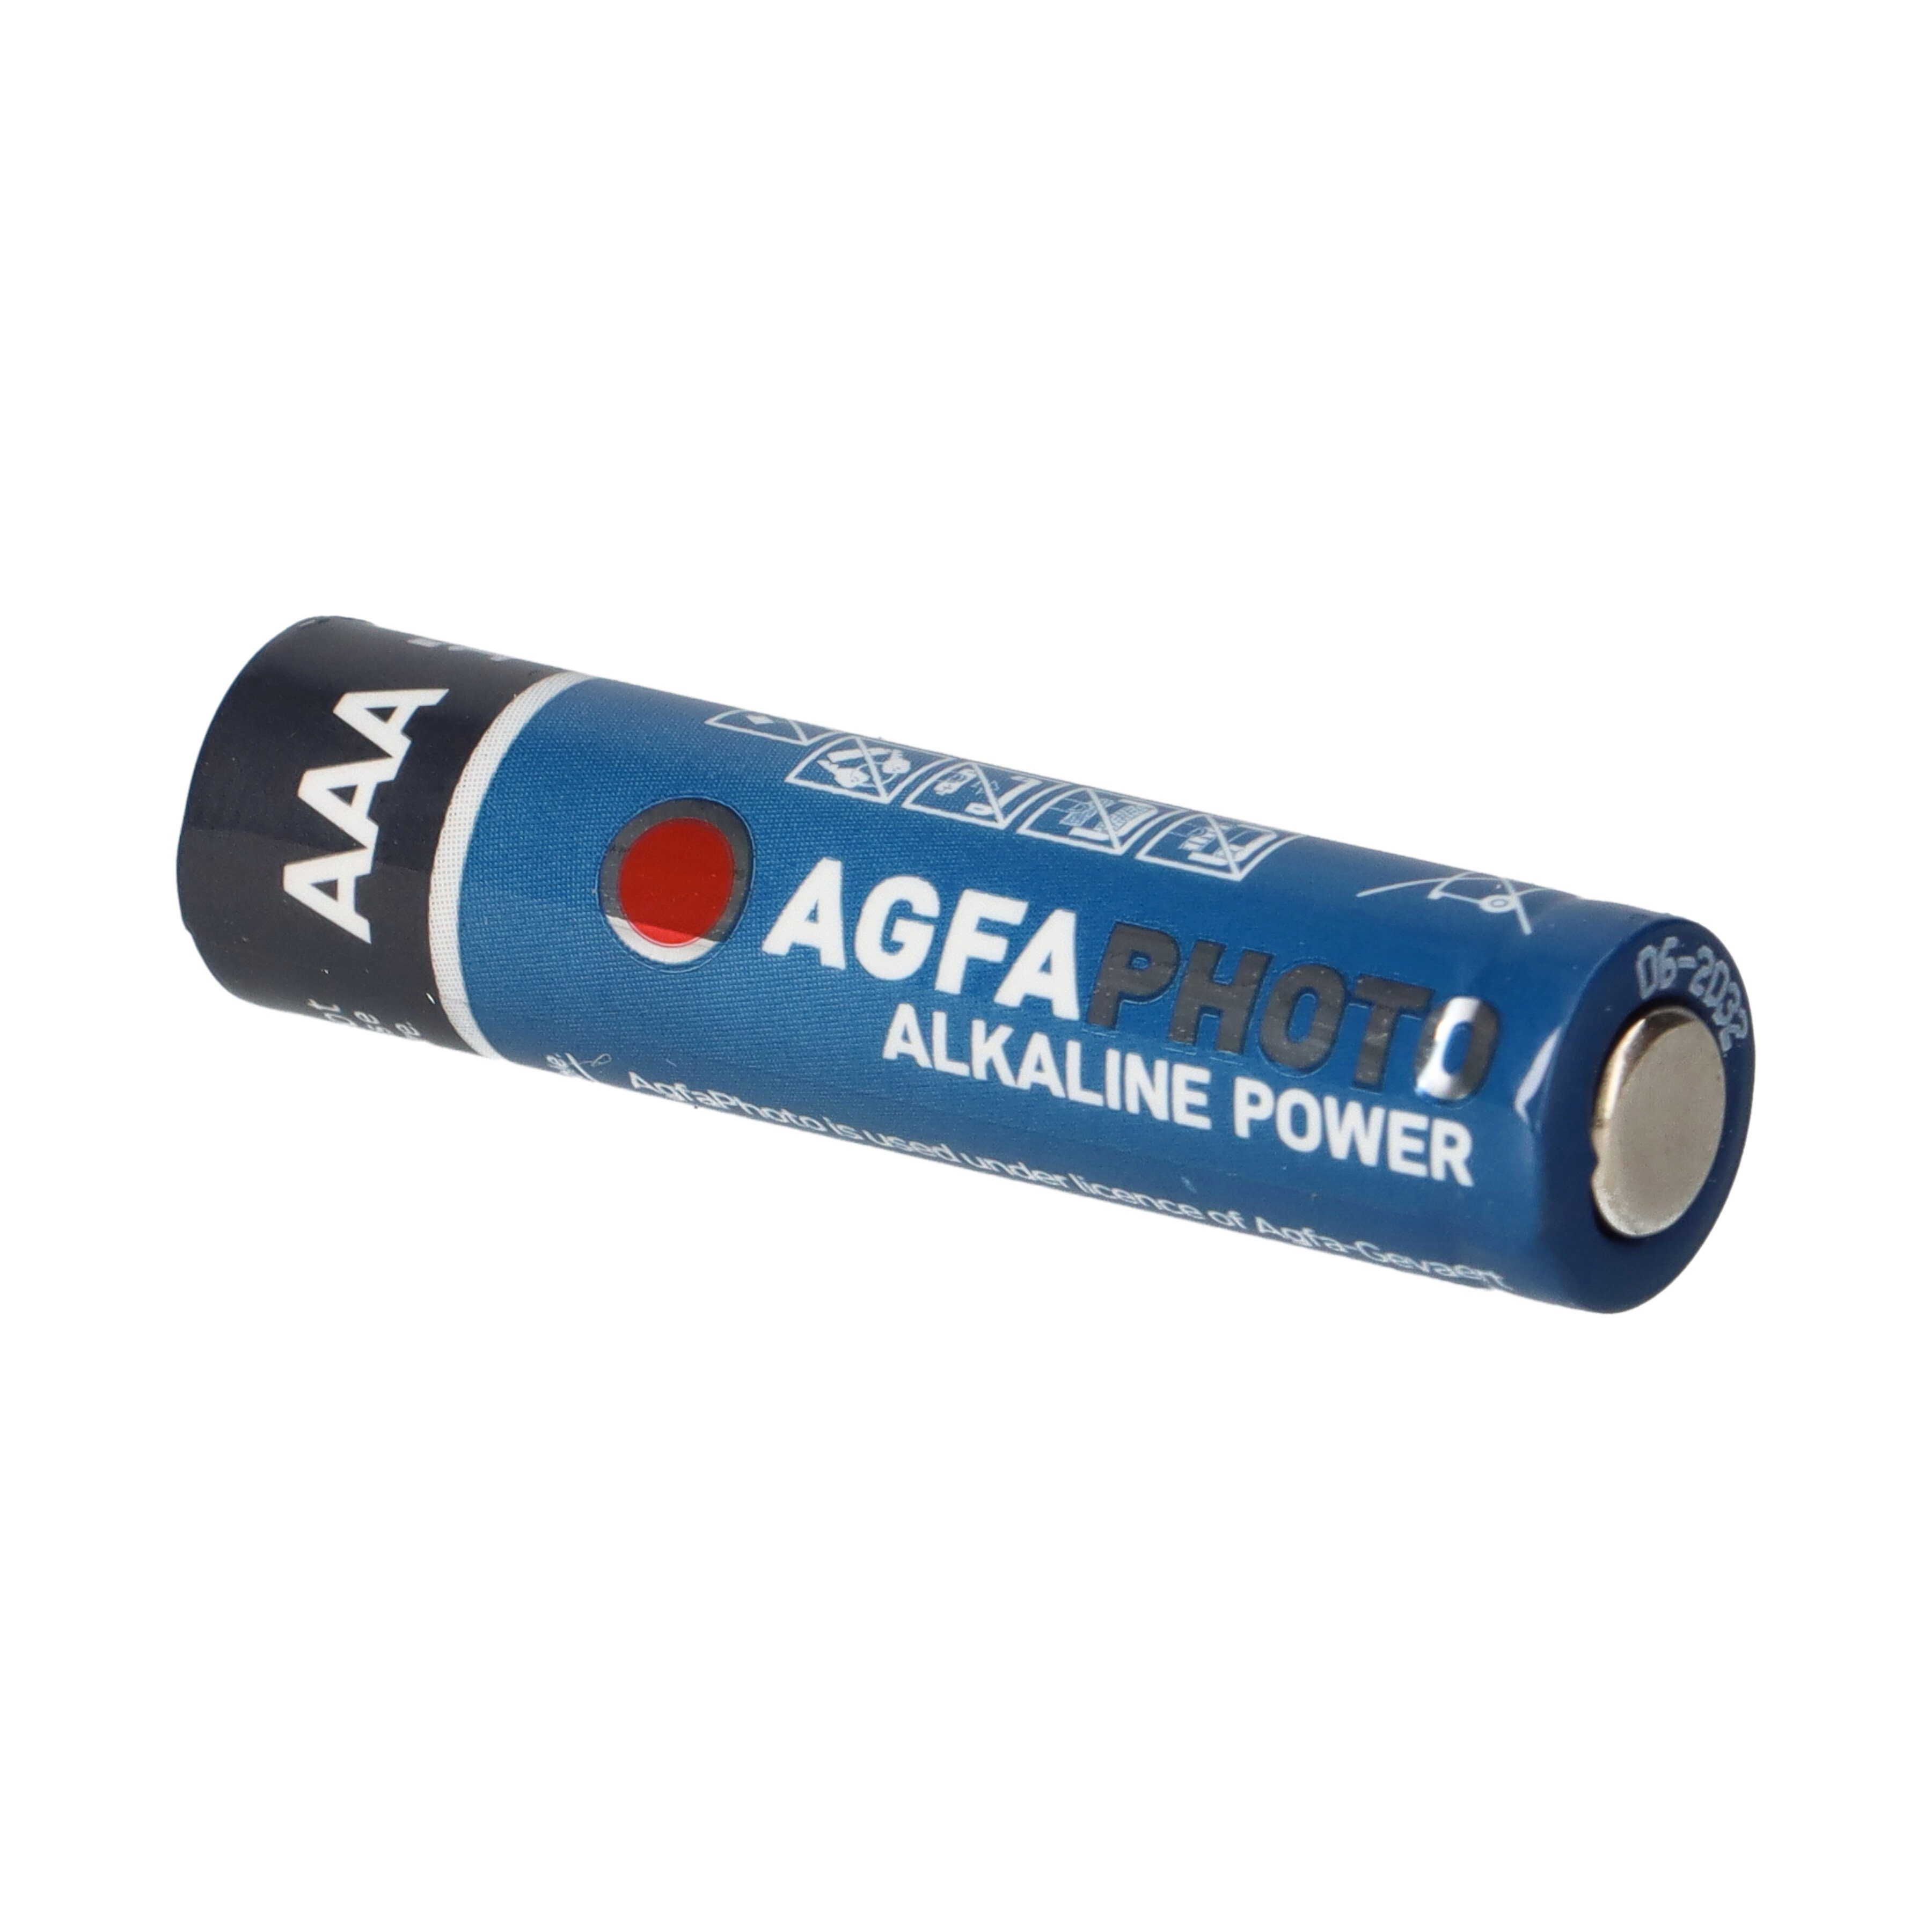 Batterie 1.5V Stück Alkaline LR03 AgfaPhoto Micro Batterie 24 AAA AGFAPHOTO